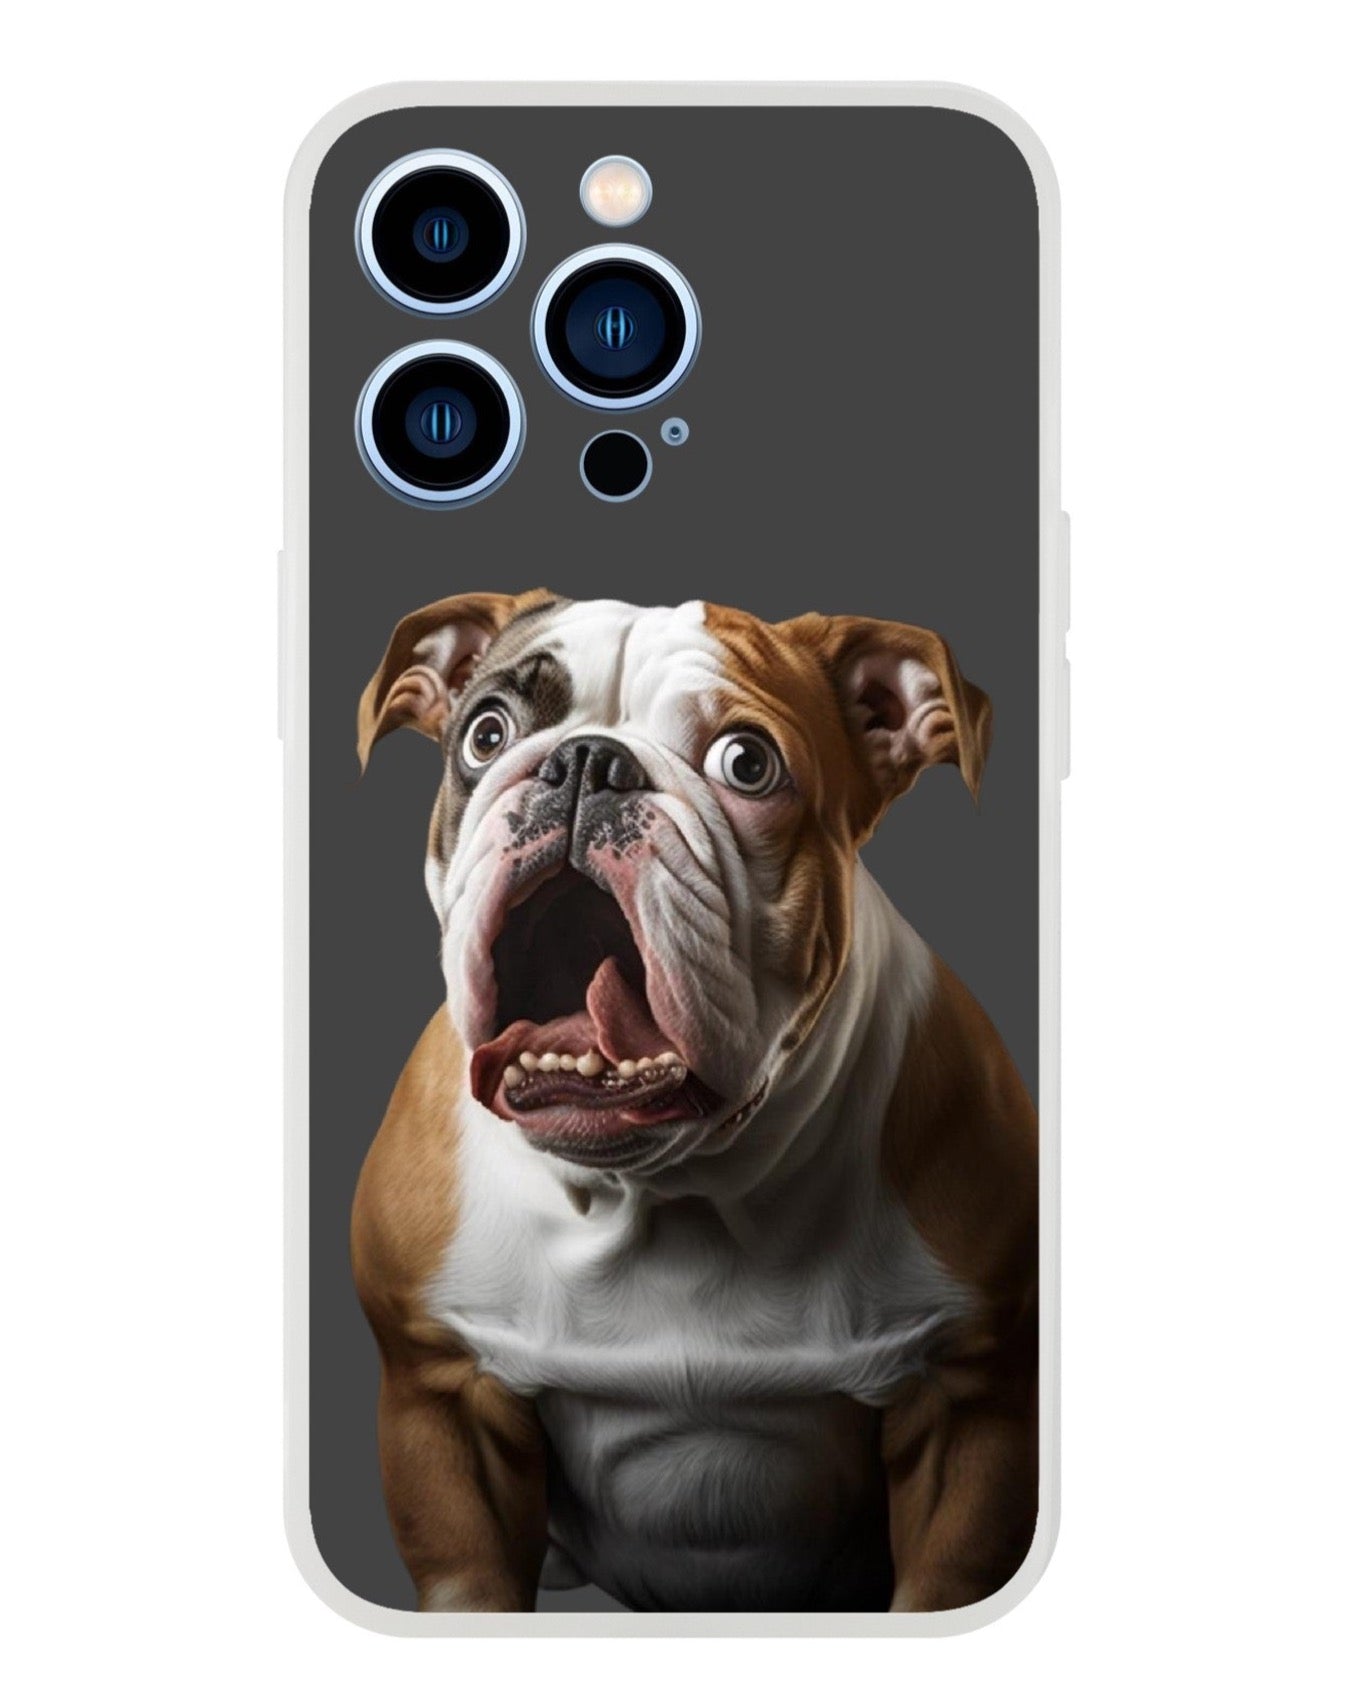 Bulldog mobile phone case